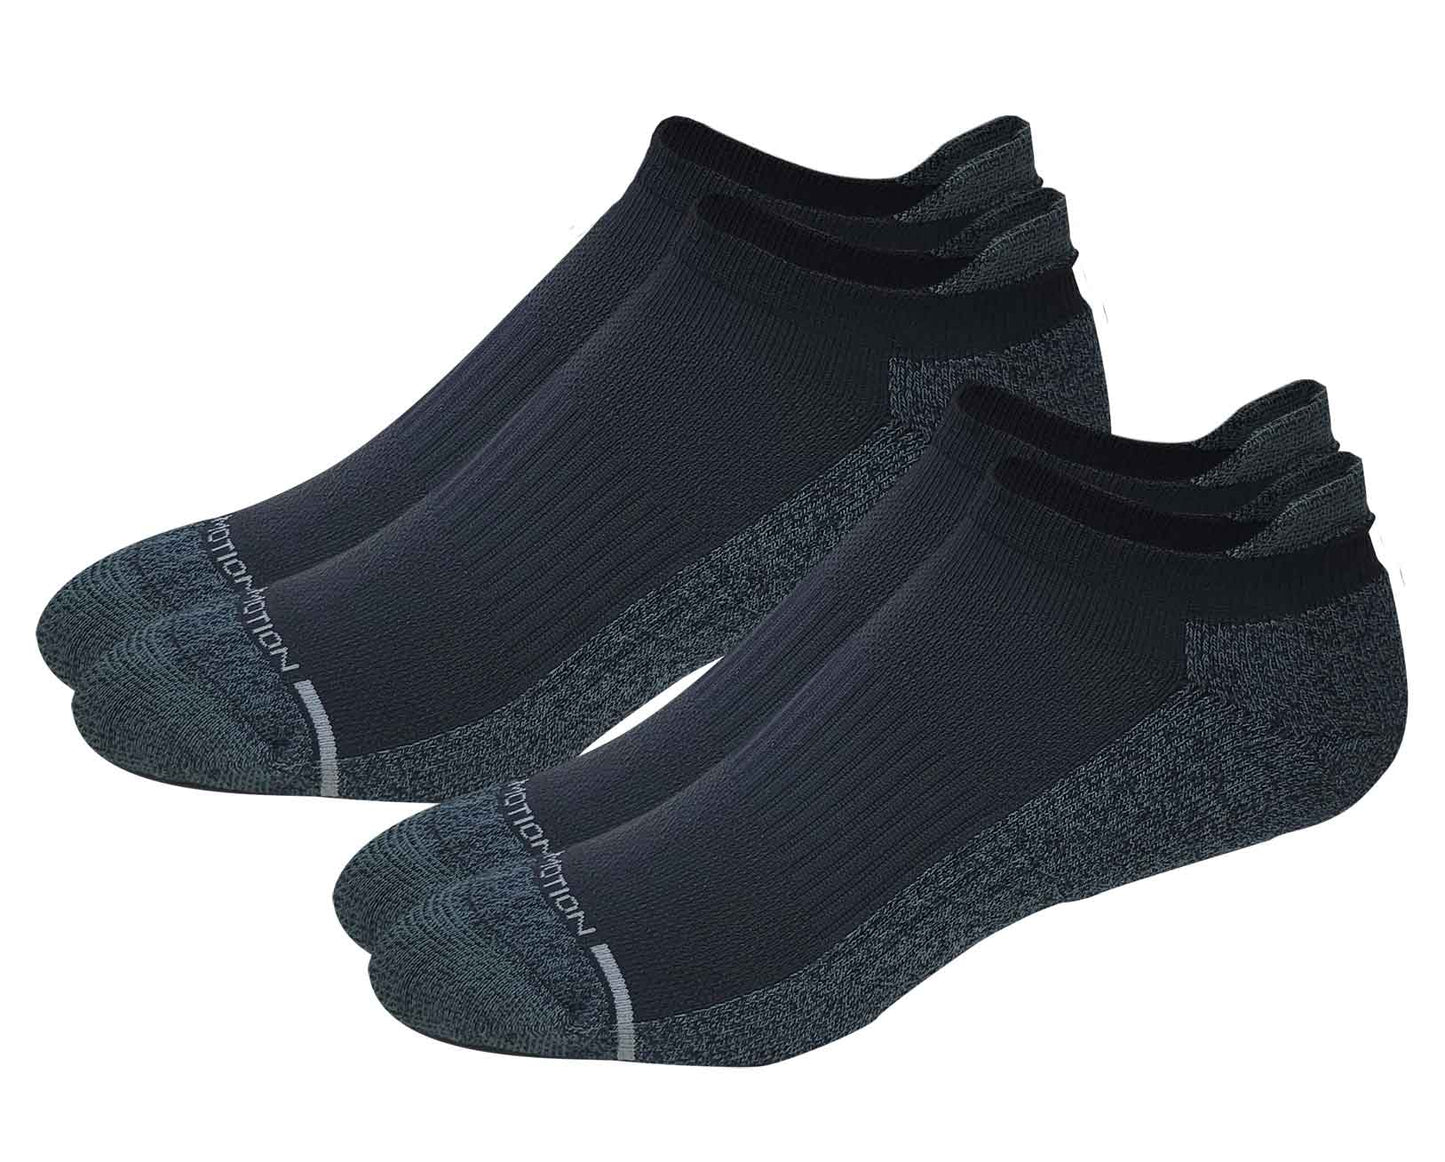 Compression Ankle Socks | Basic Colors Everyday | Men's (6 Pack)